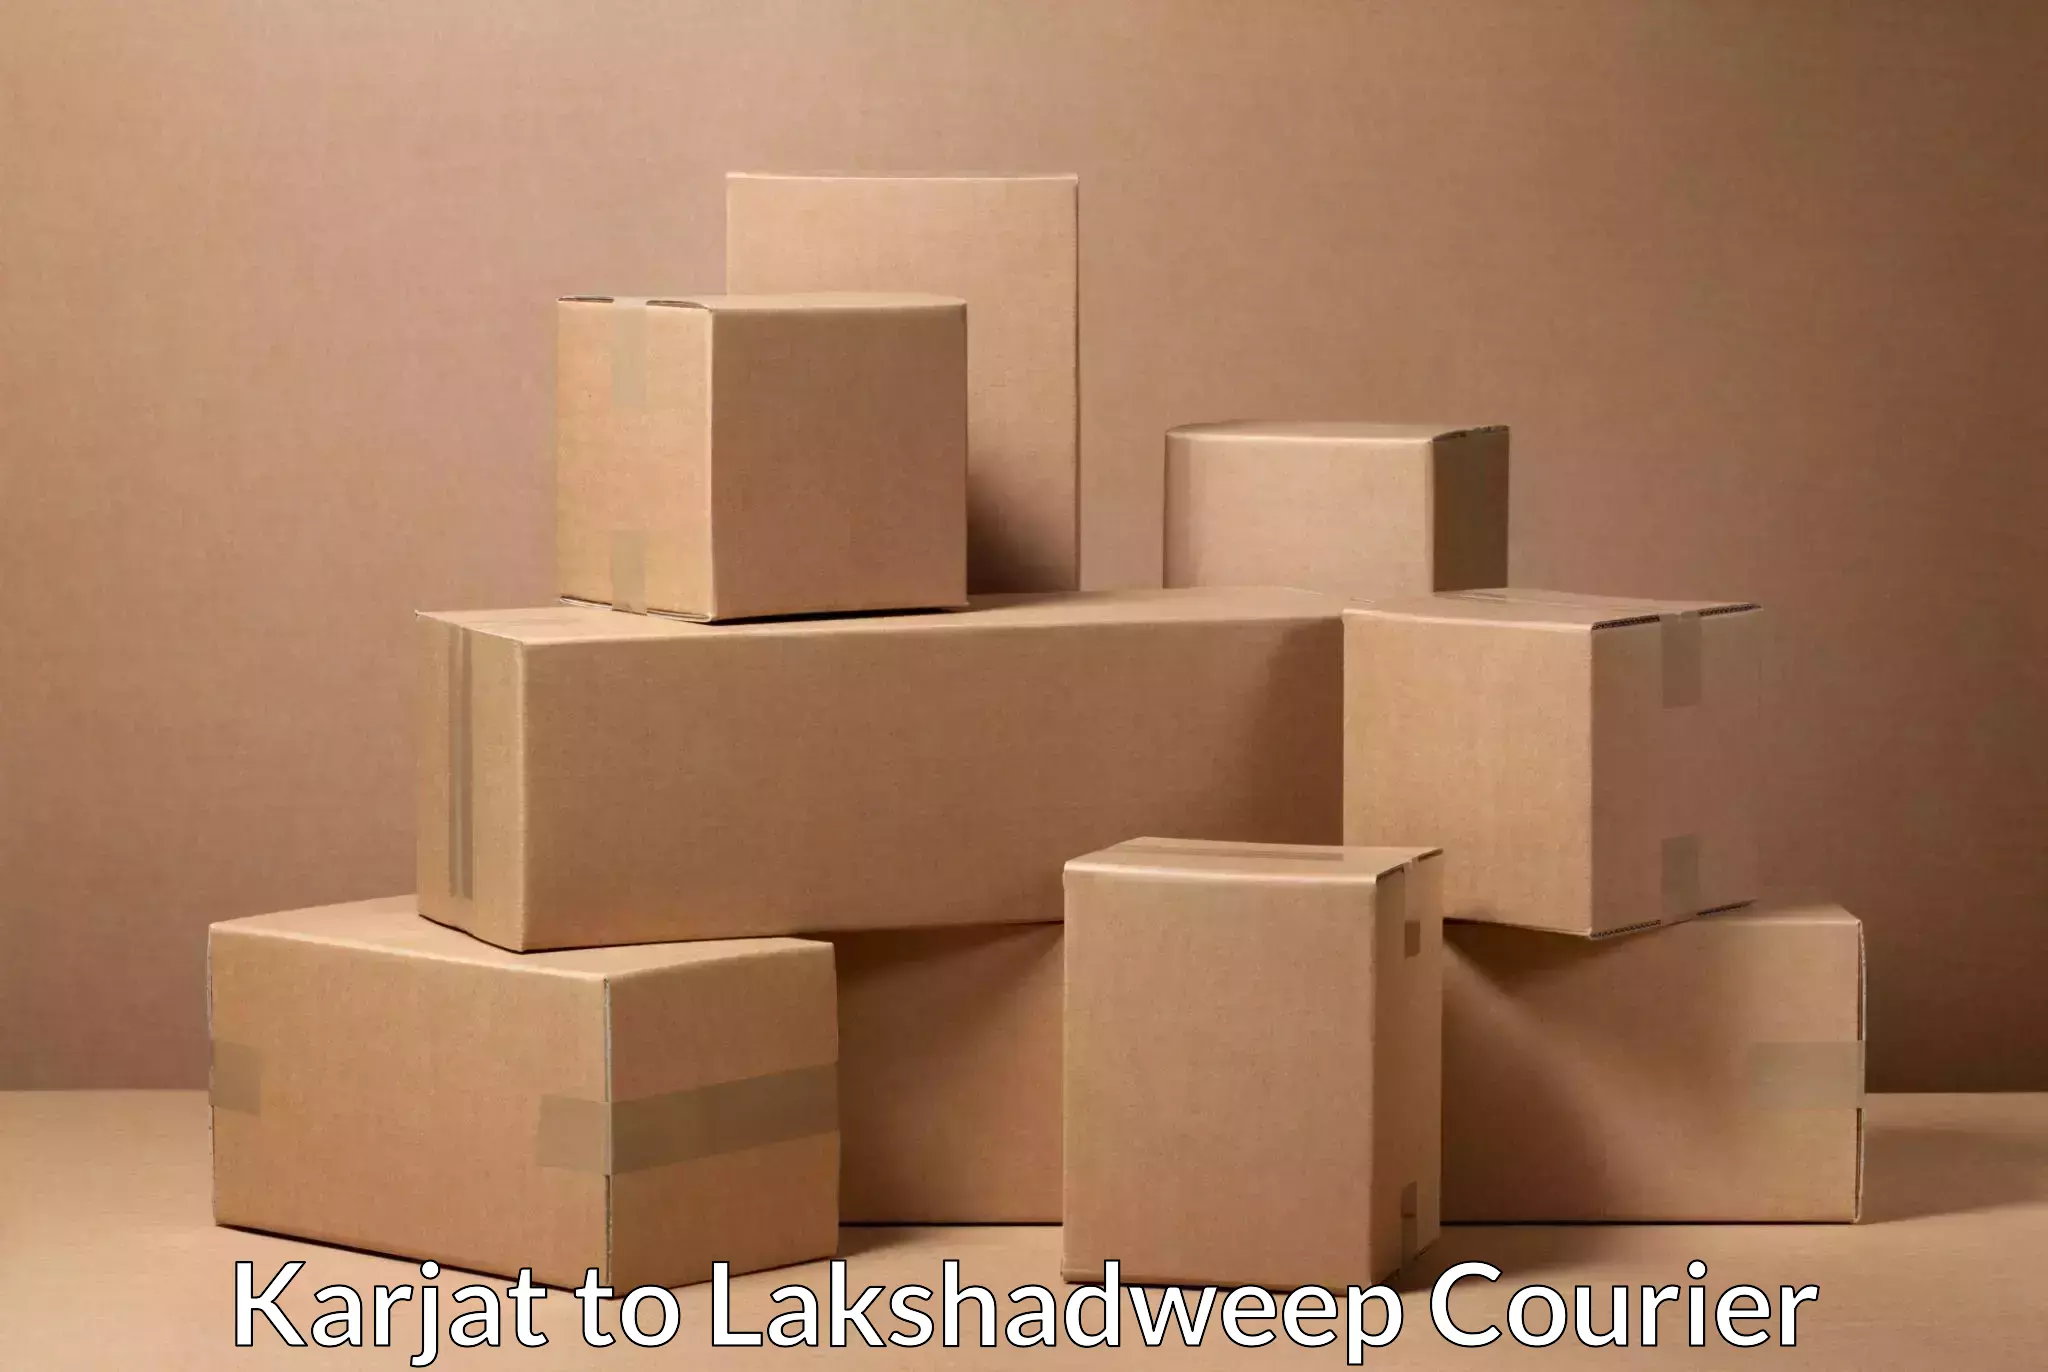 Customer-centric shipping Karjat to Lakshadweep